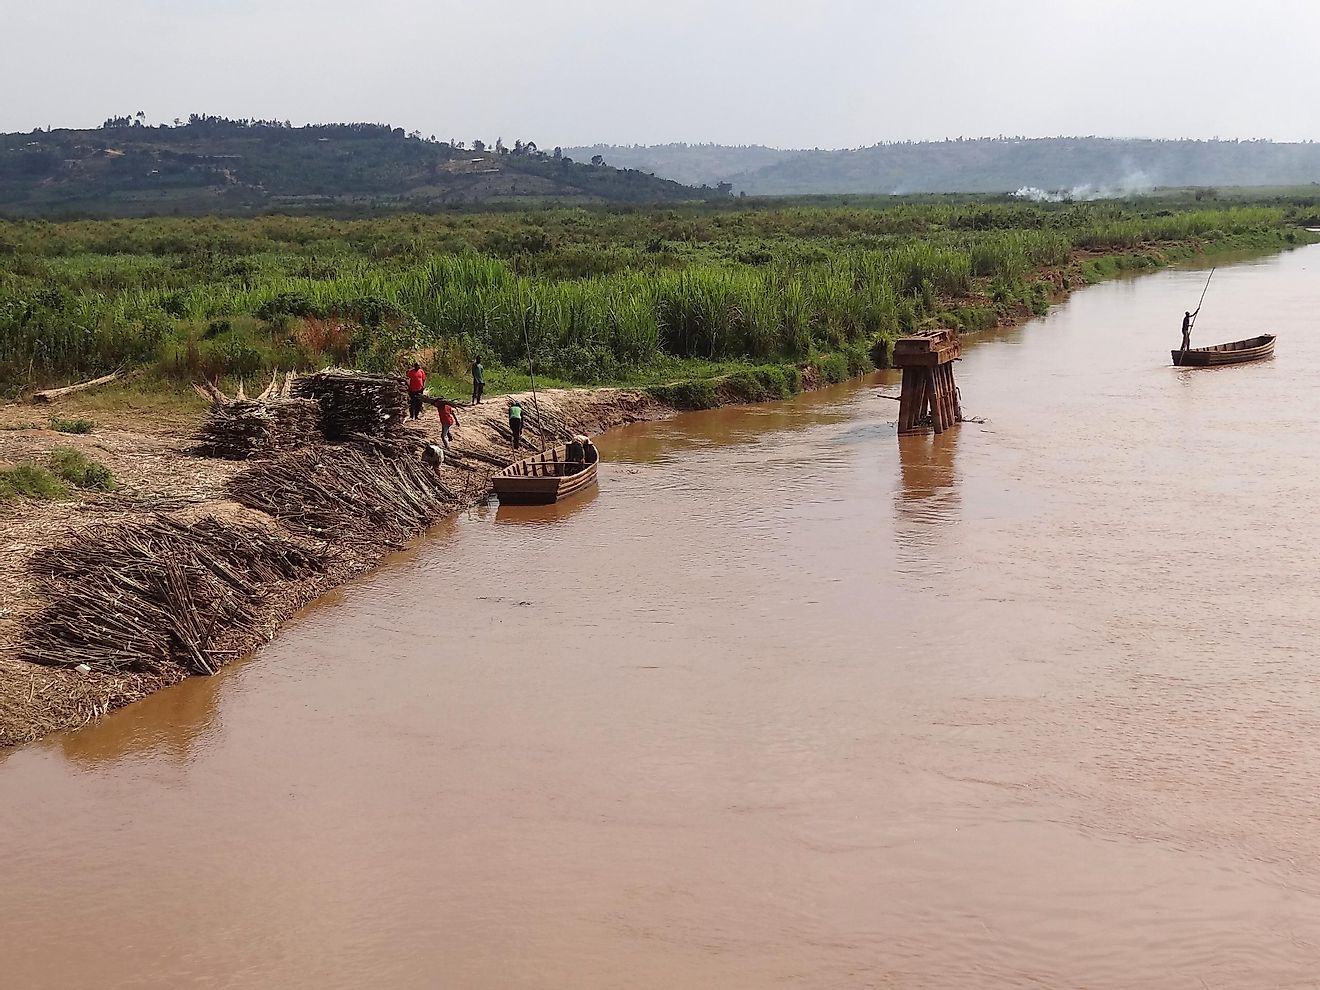 Nyabarongo River in Rwanda and marshlands surrounding it.